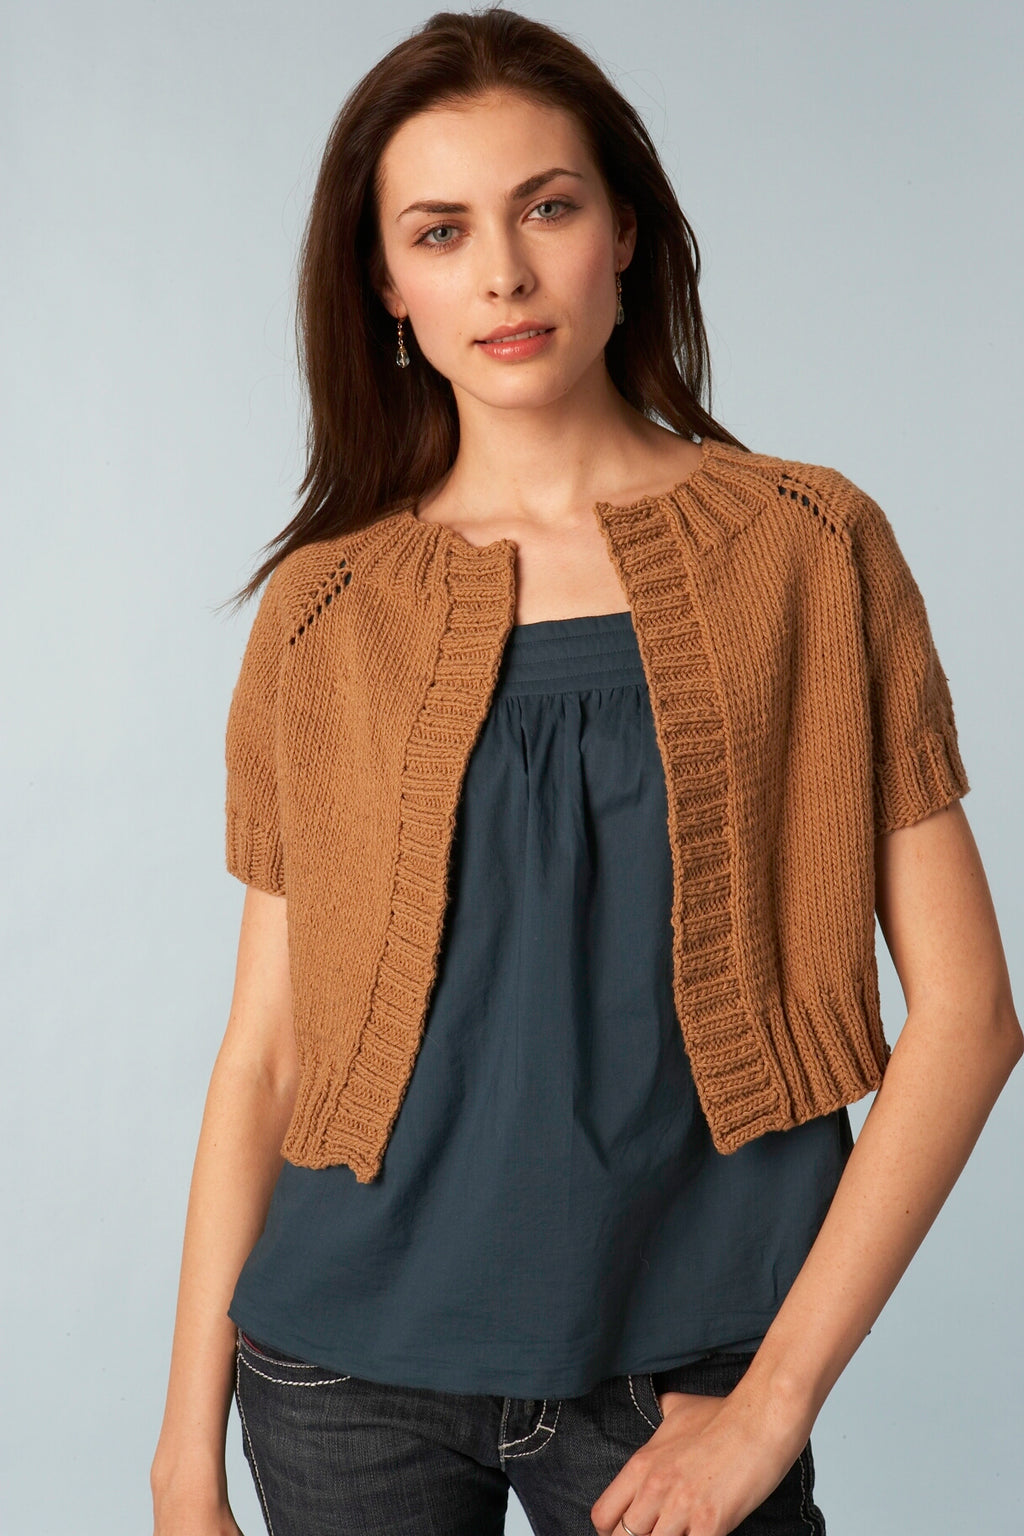 Cropped Raglan Sweater Pattern (Knit) – Lion Brand Yarn